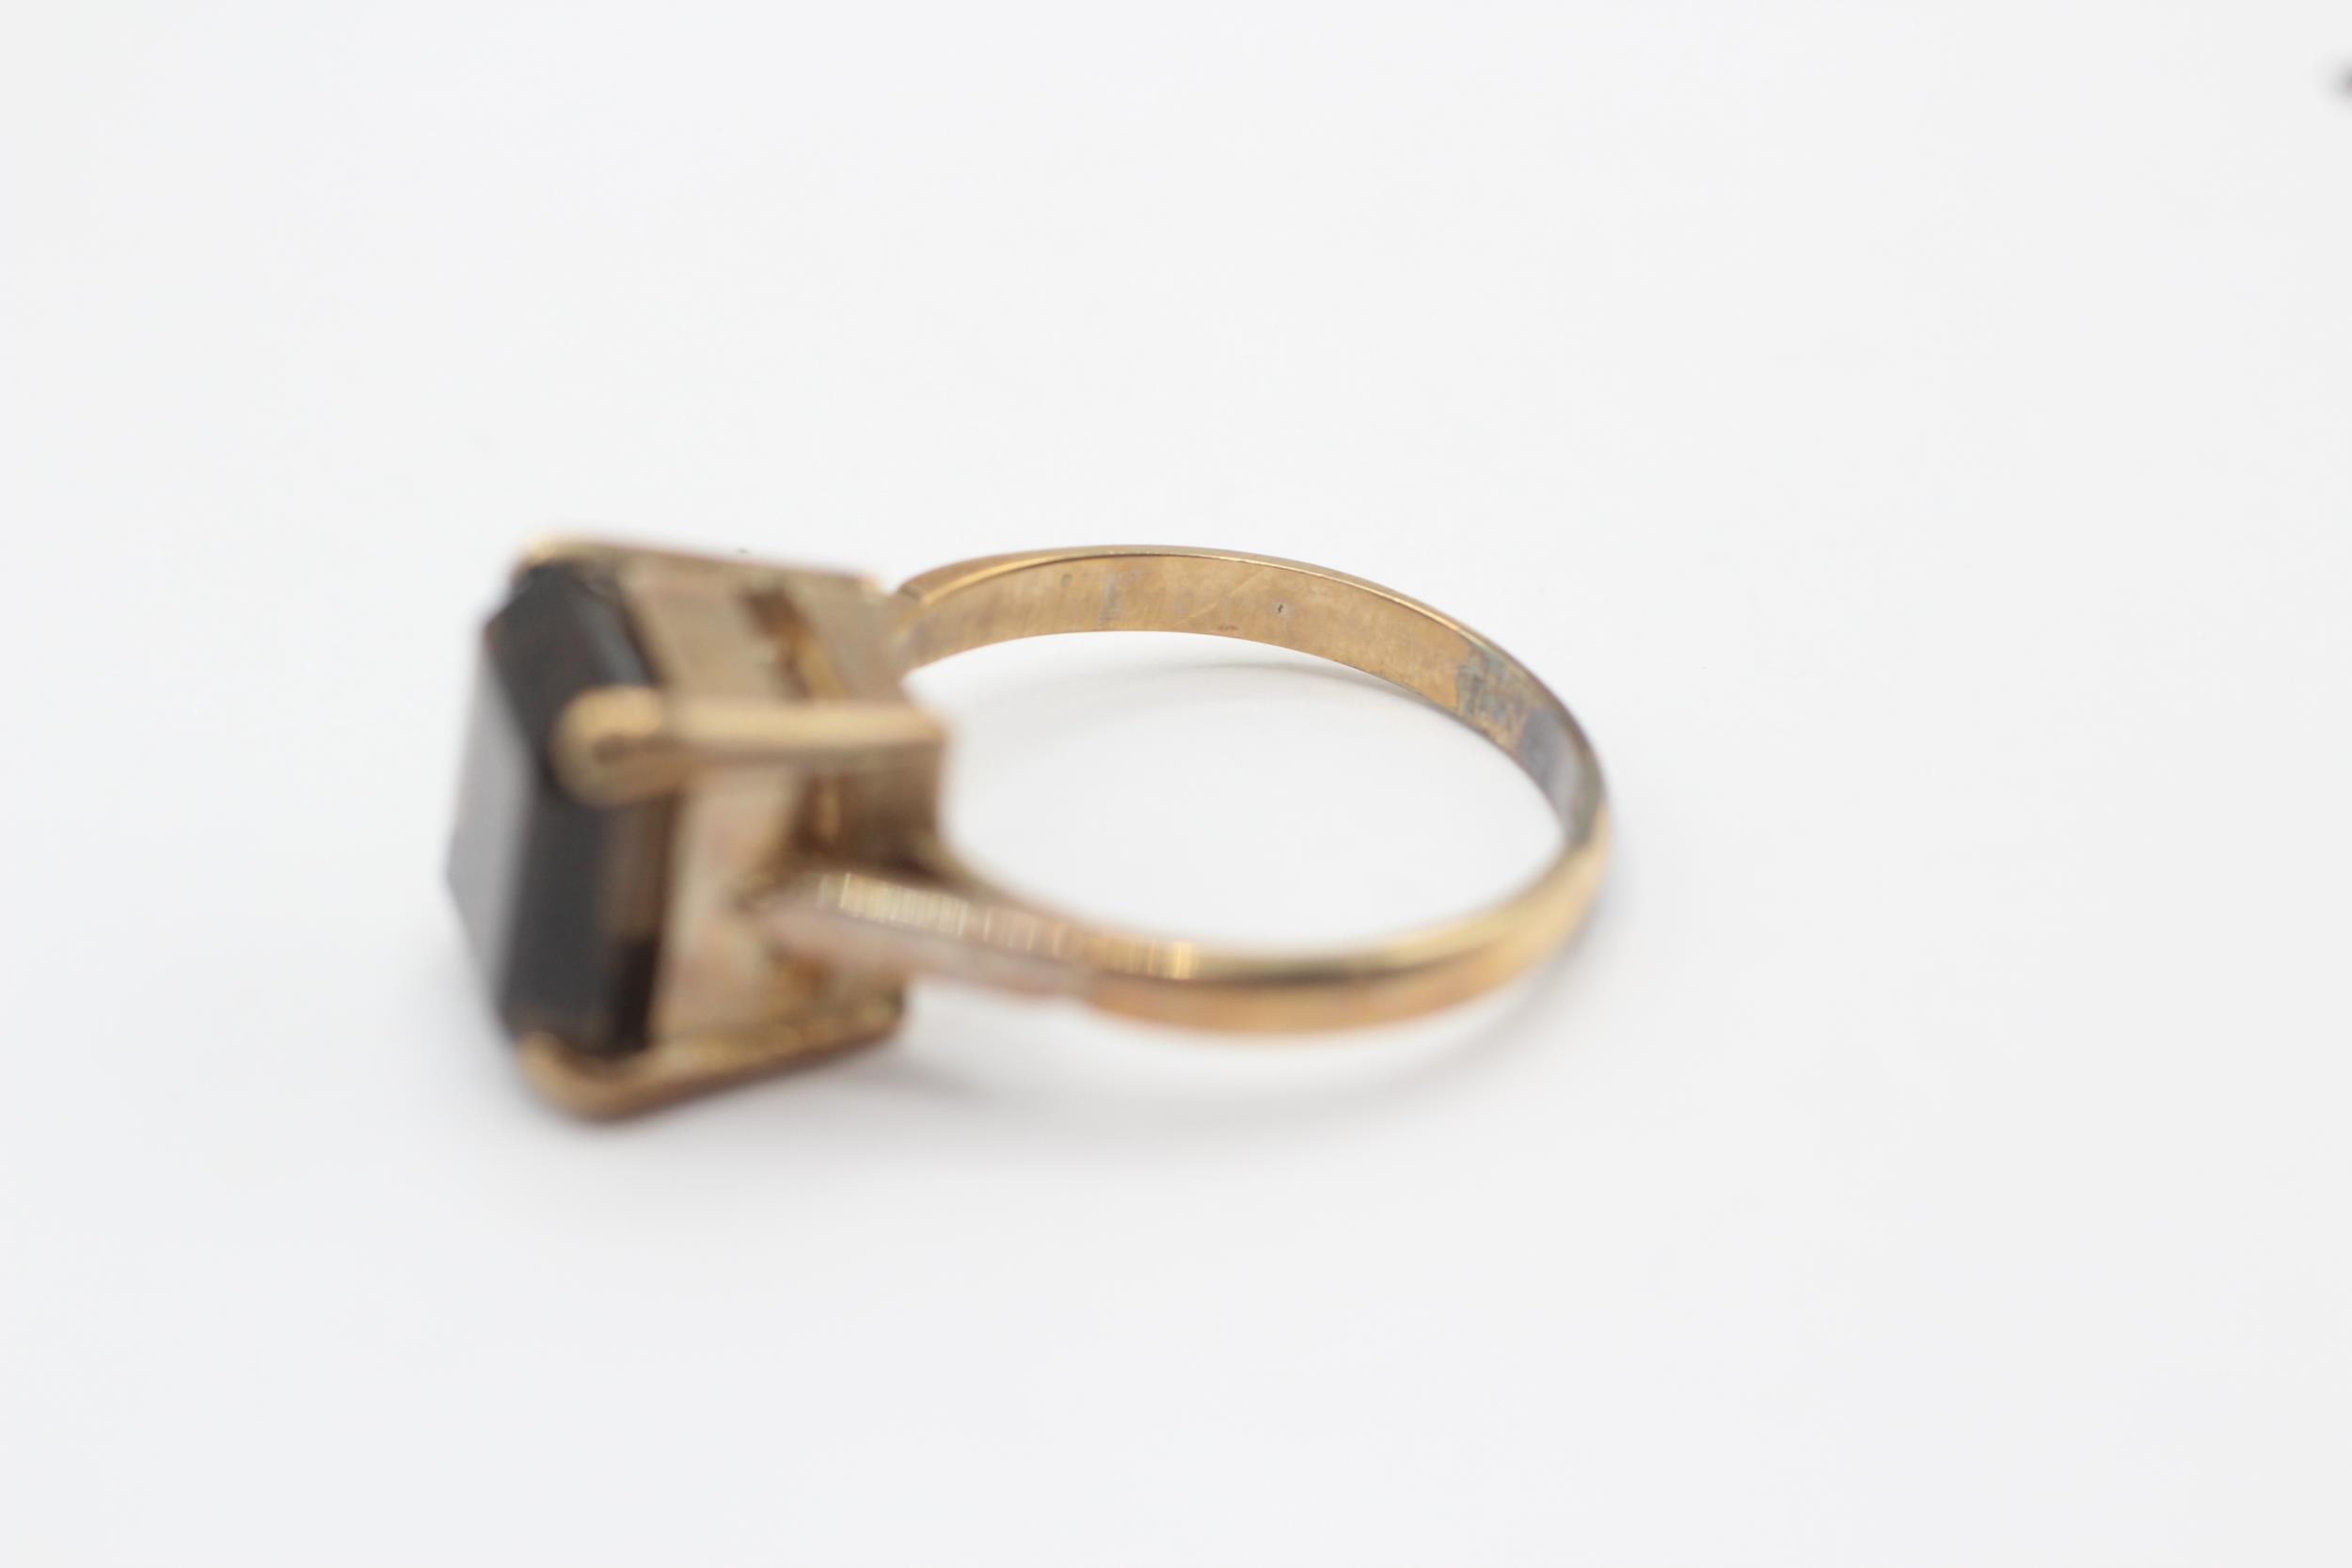 9ct gold smokey quartz single stone ring Size K 3.6 g - Image 2 of 6